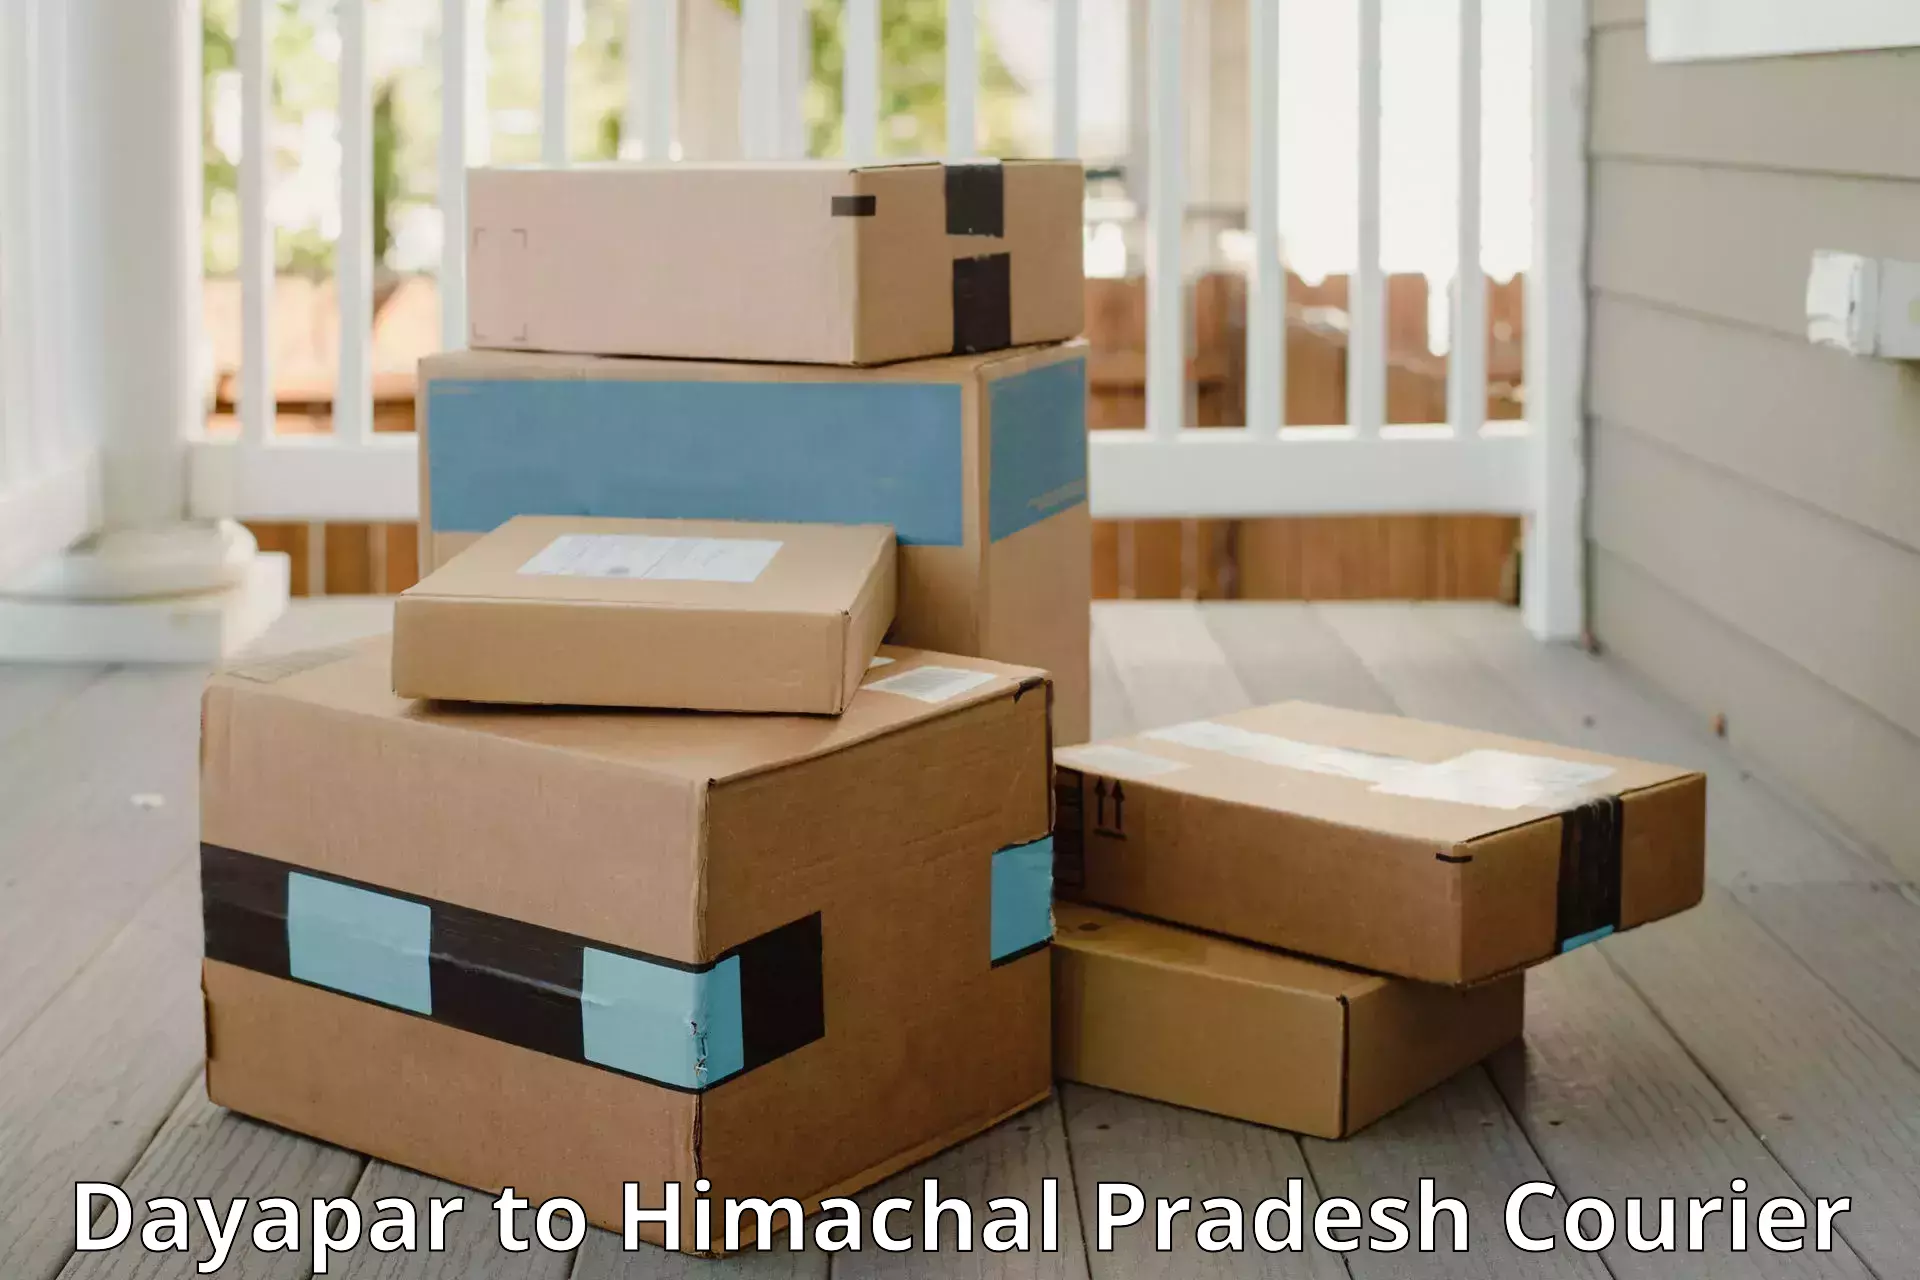 Luggage shipment specialists Dayapar to Himachal Pradesh